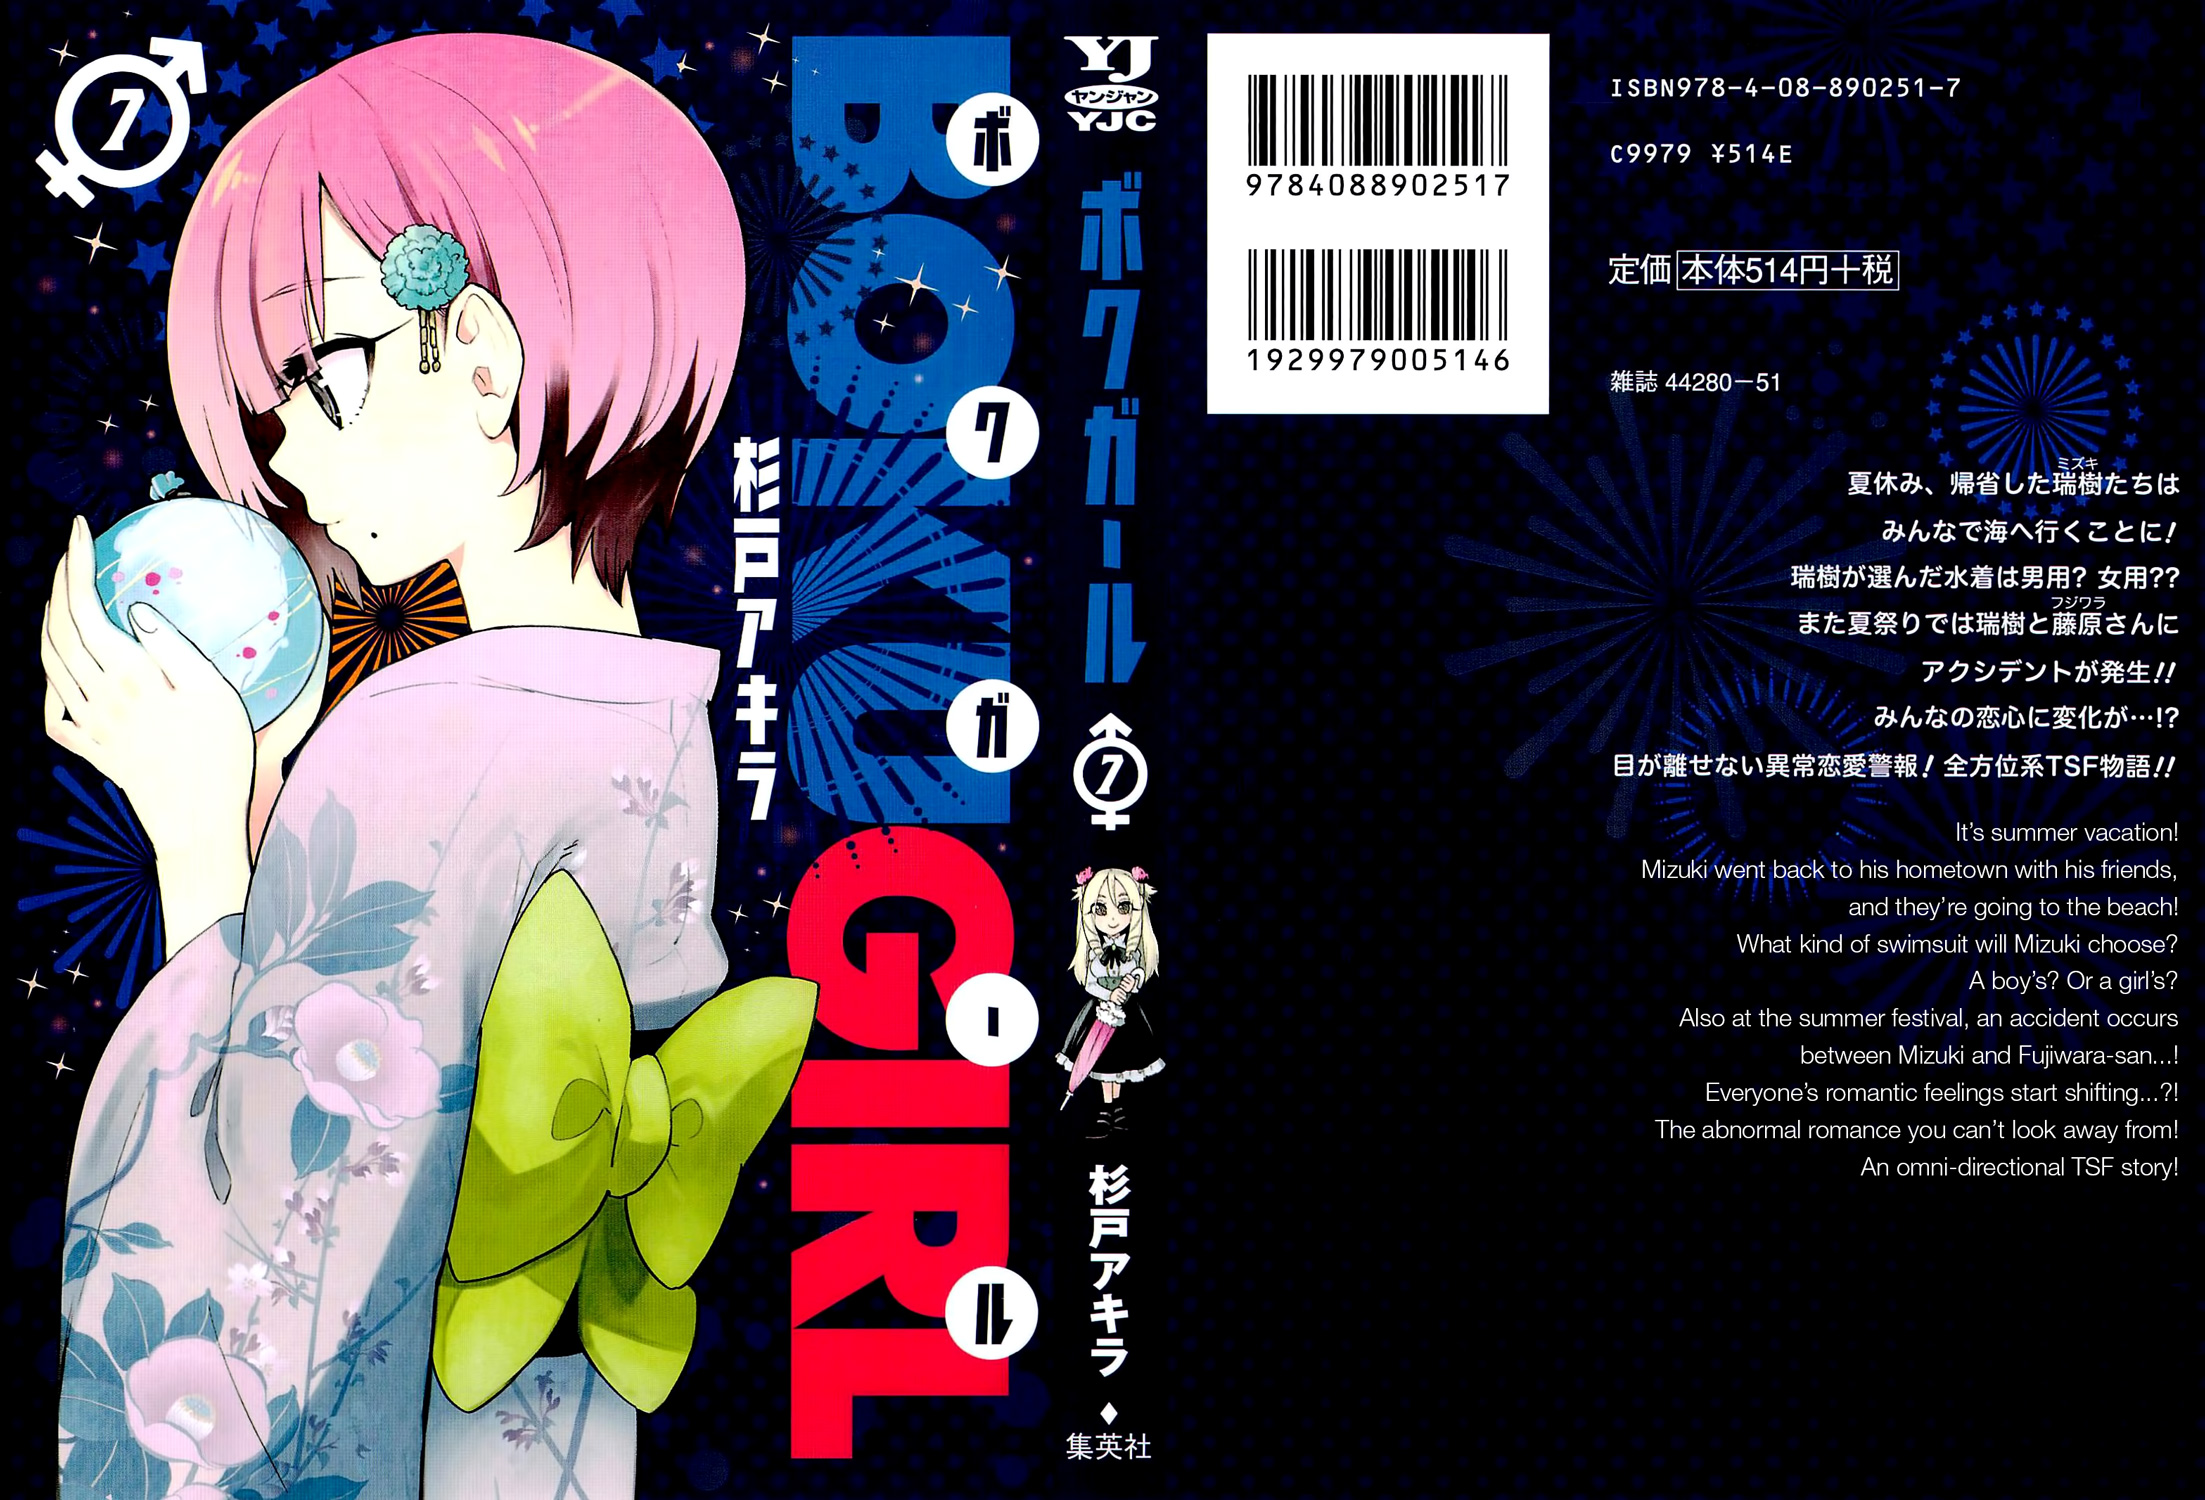 Boku Girl Vol.7 Ch.58